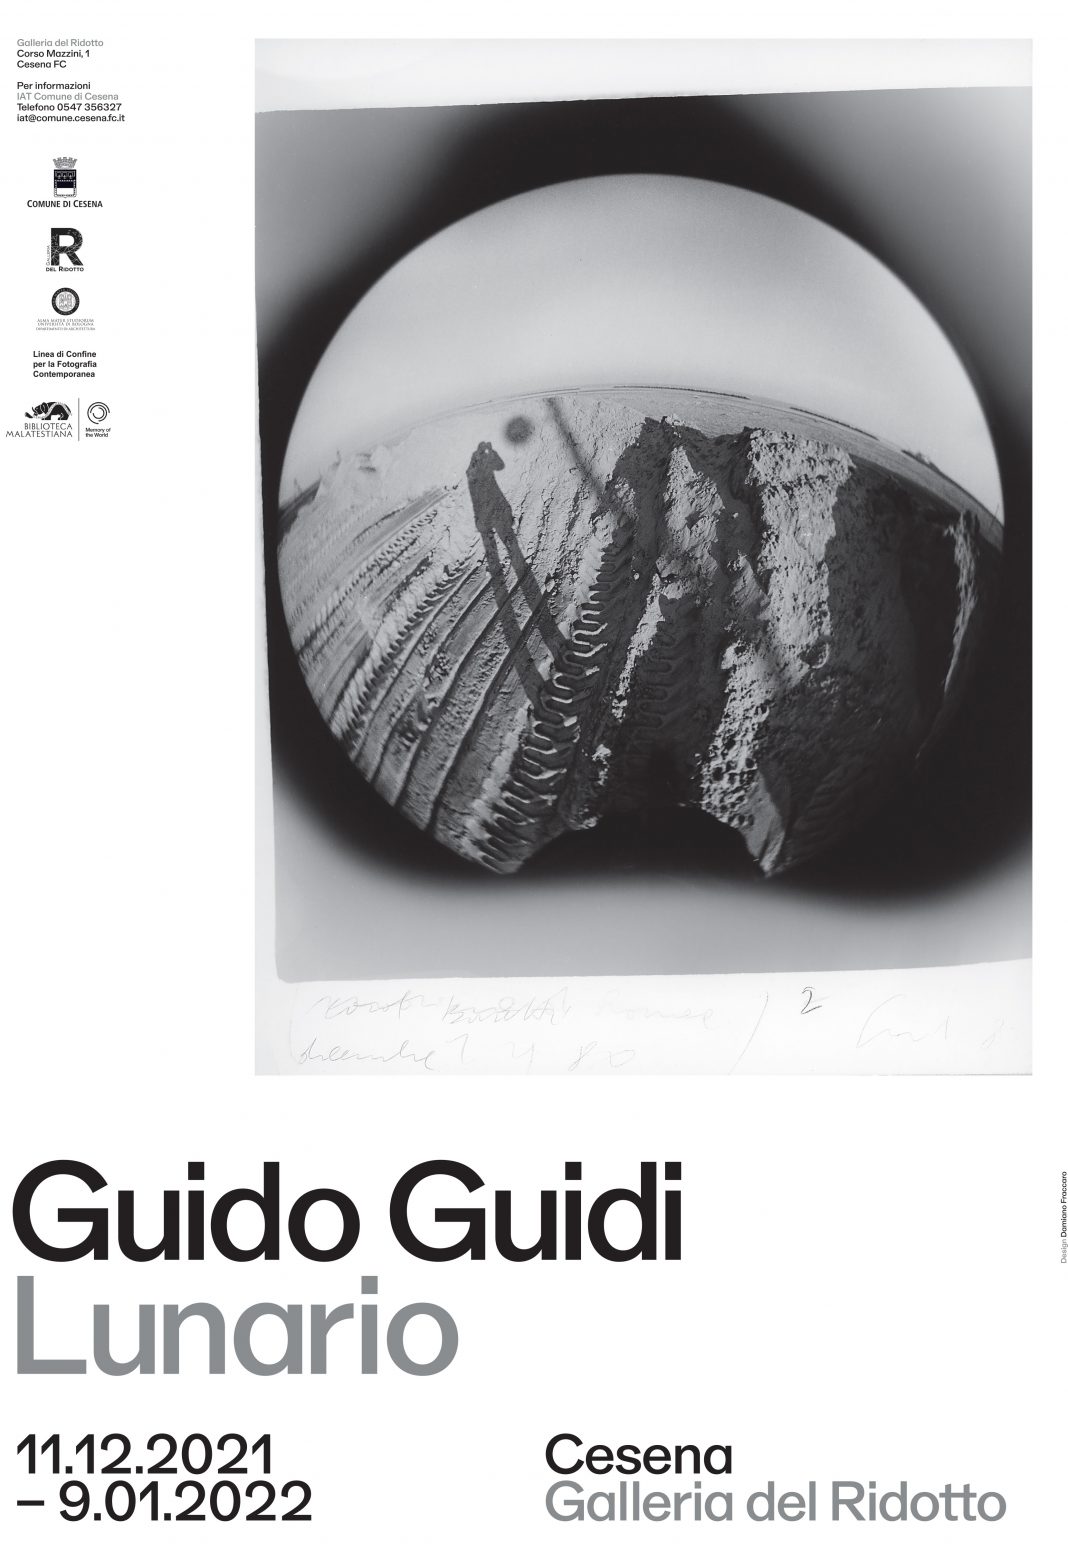 Guido Guidi – Lunariohttps://www.exibart.com/repository/media/formidable/11/img/ad5/locandina-A3_lunario_low-1068x1560.jpg